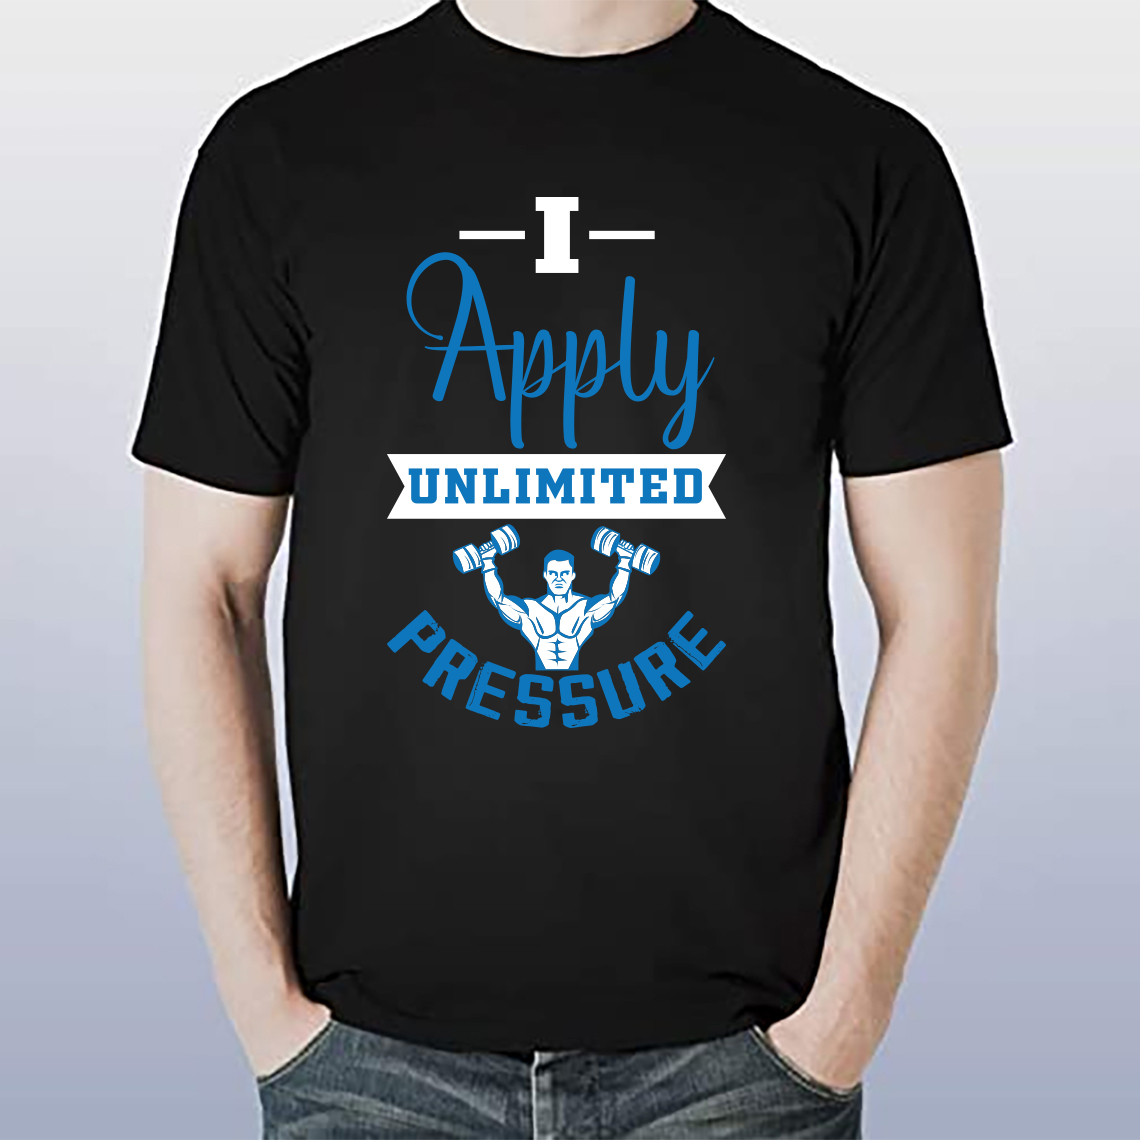 t shirt design for i apply unlimited pressure